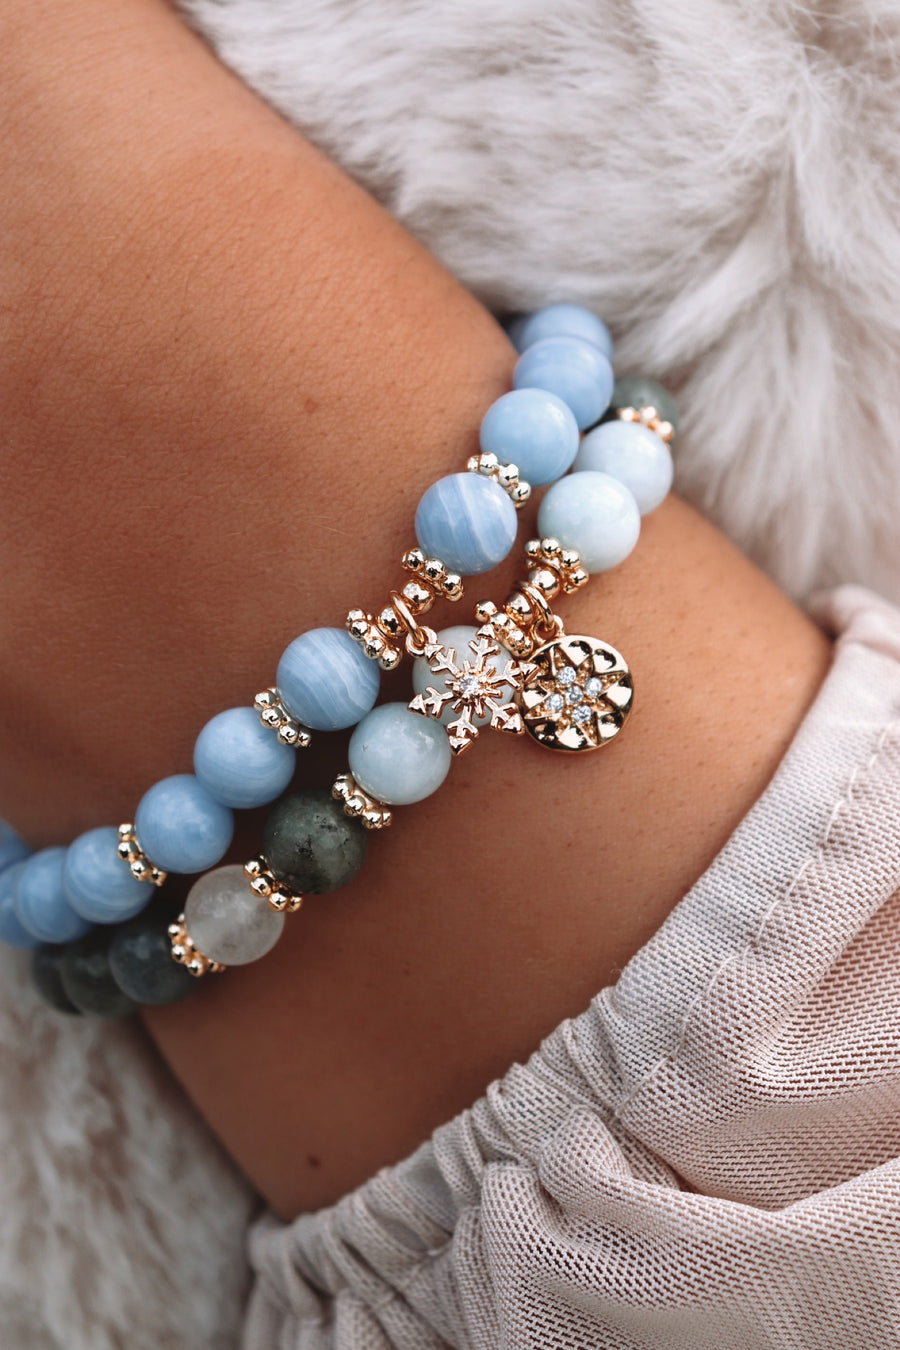 Stretch Bracelet | 8mm Beads (Lace Agate - Blue) Large